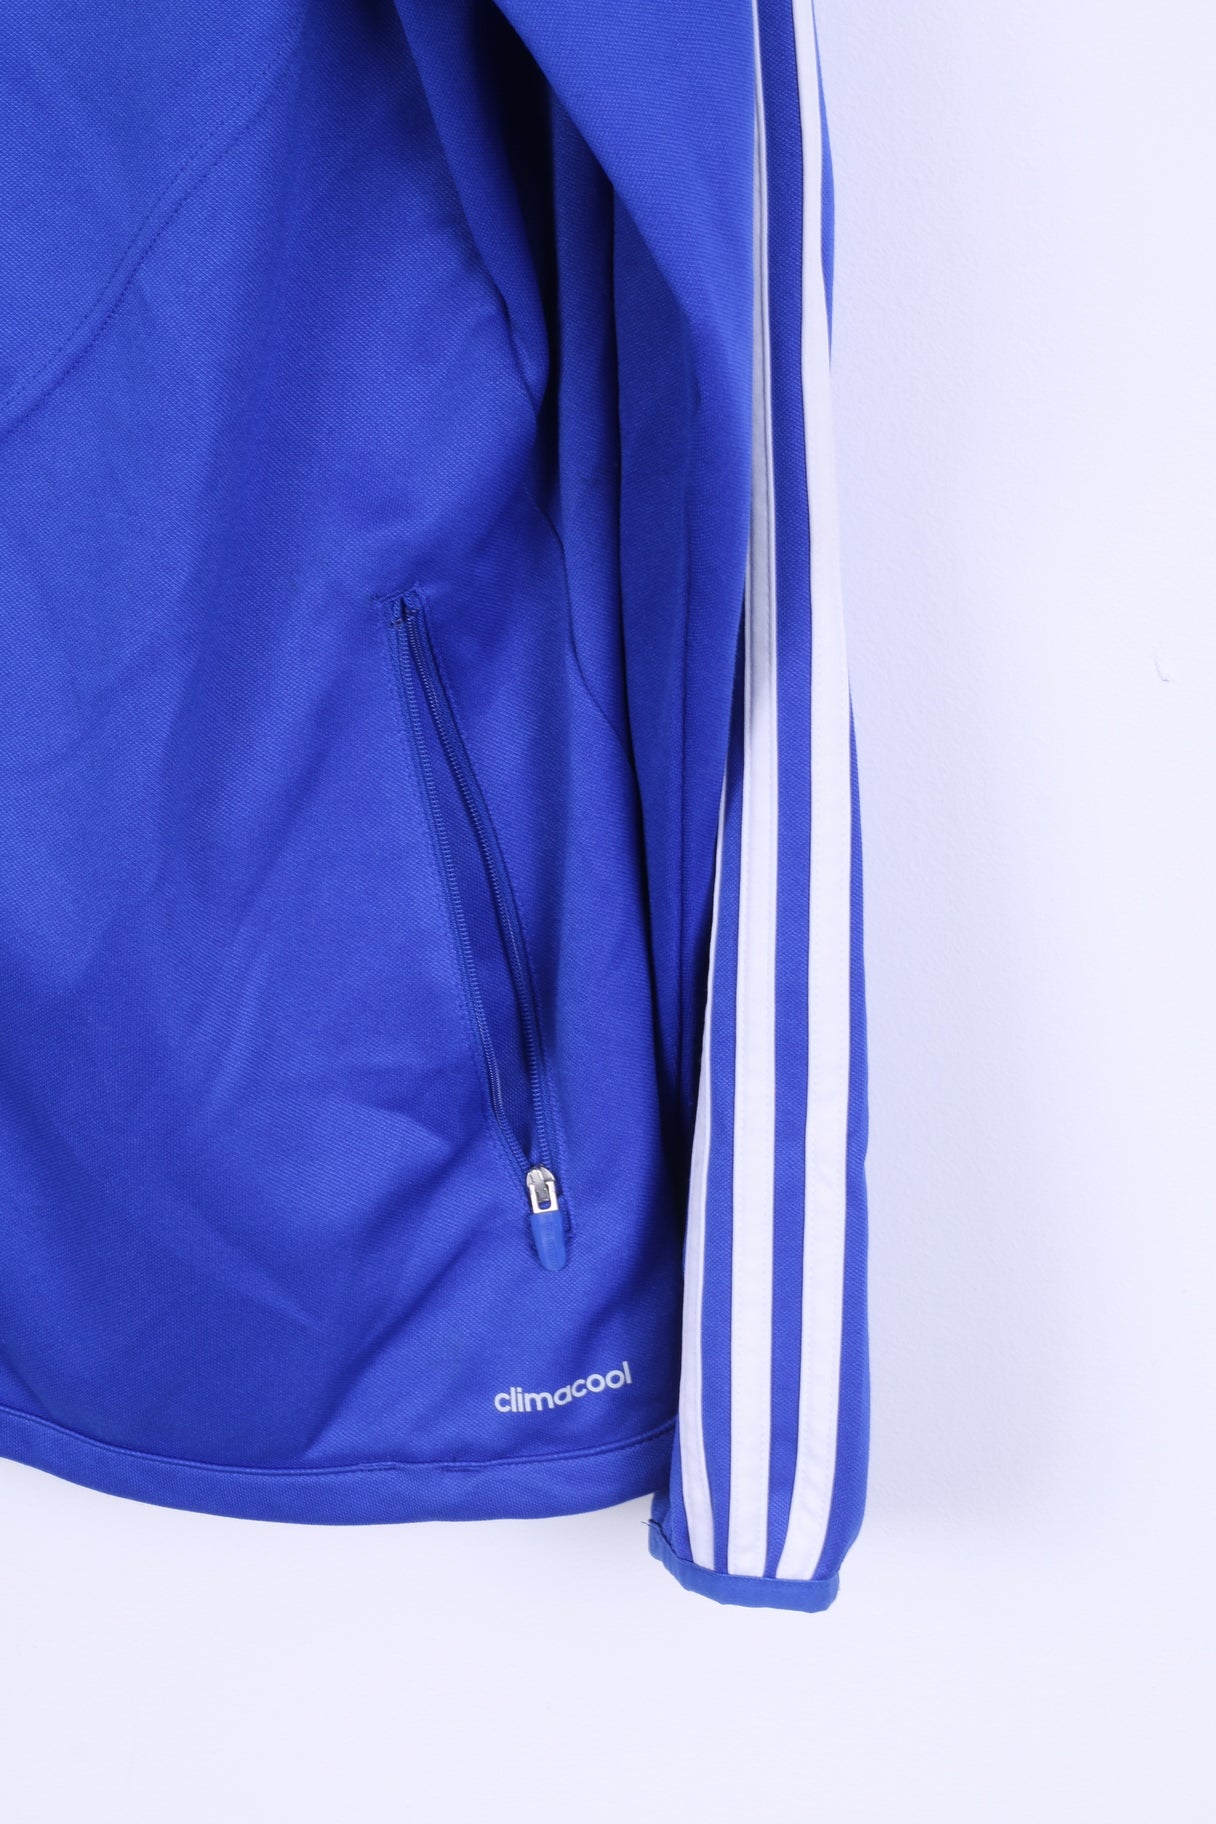 Adidas Mens M Sweatshirt Blue Åby IF ledare Football Zippered Training Sport Top